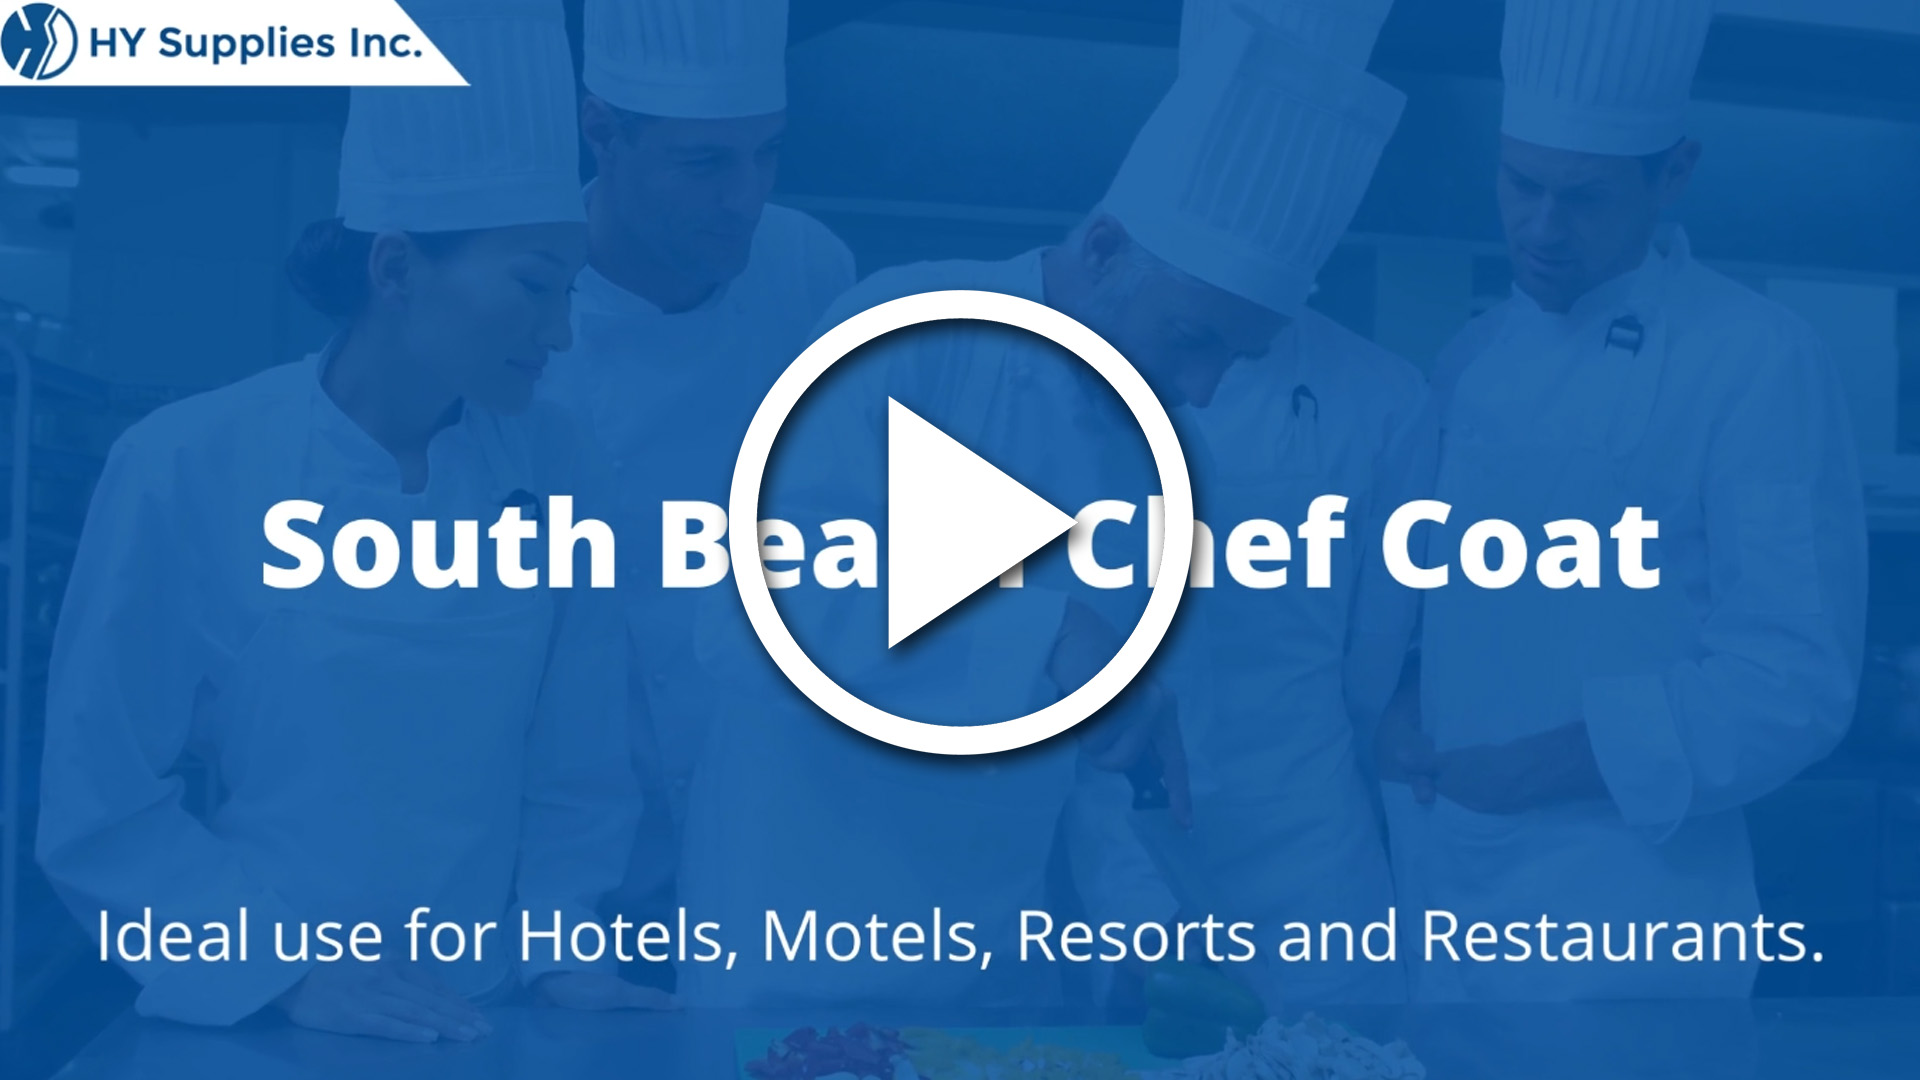 South Beach Chef Coat